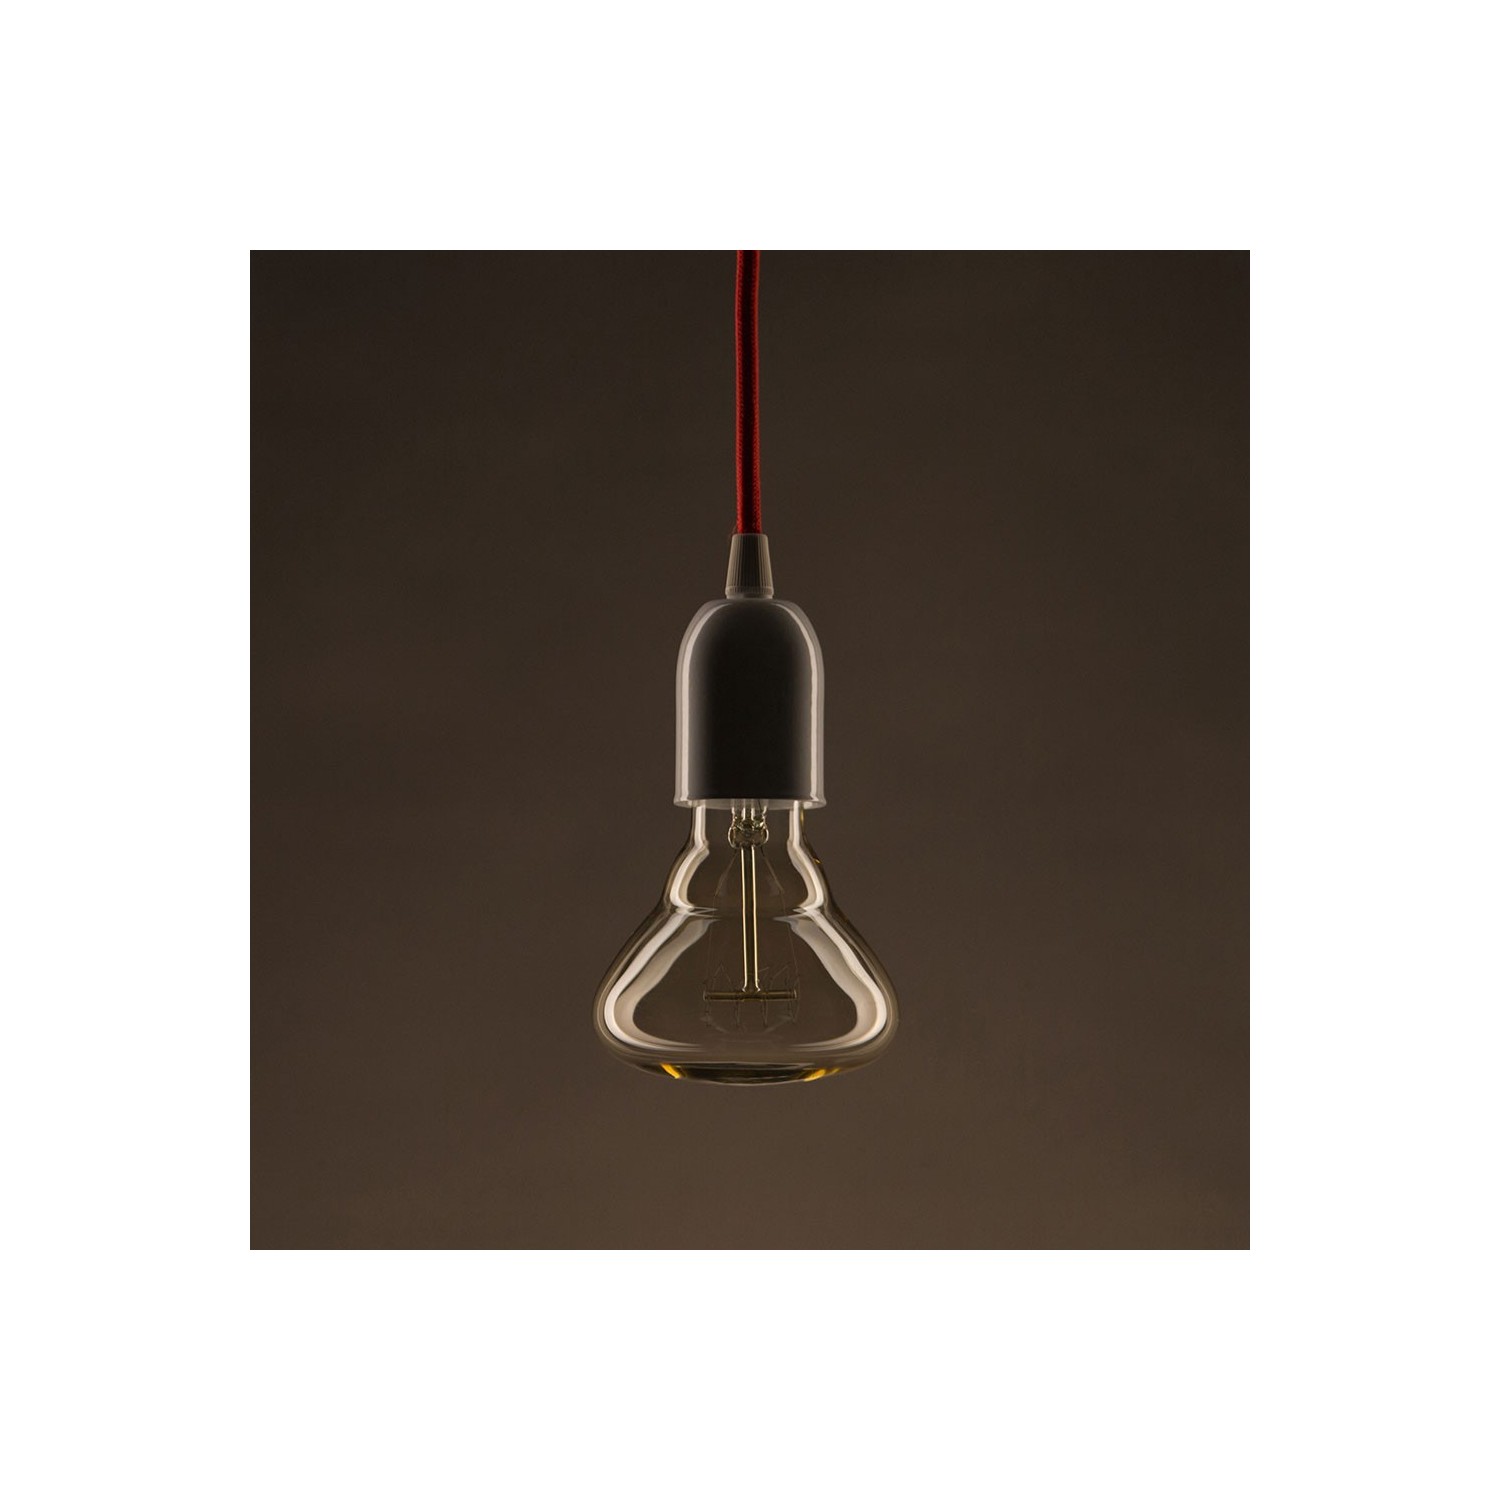 Vintage Golden Light Bulb BR95 Carbon Filament Spiral Curve Horizontal 25W E27 Dimmable 2000K